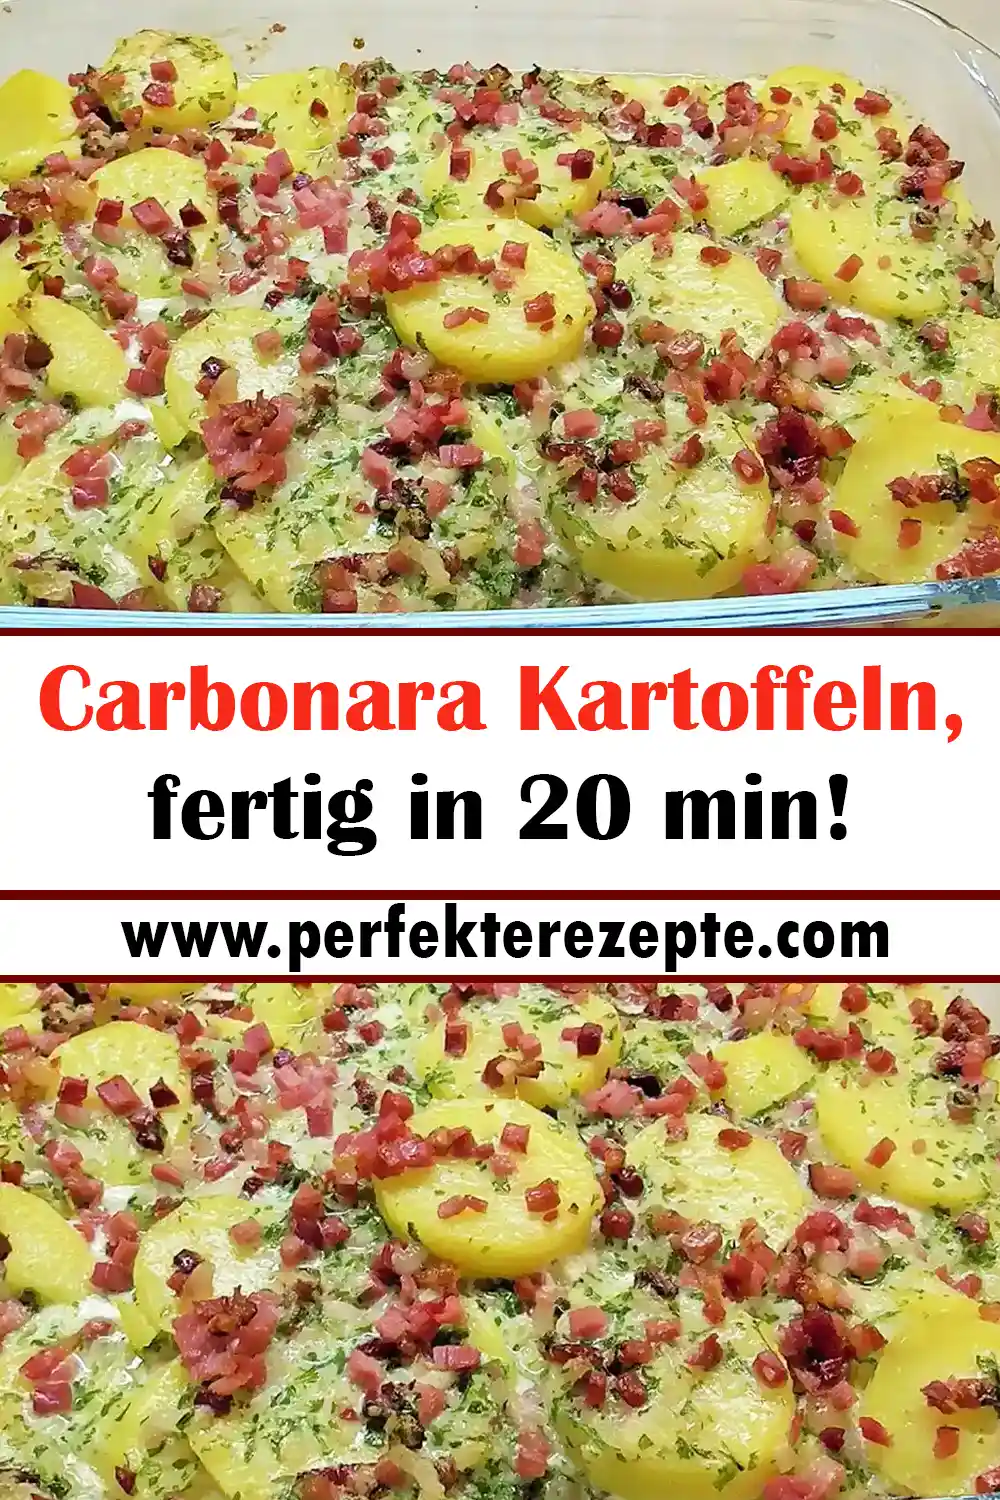 Carbonara Kartoffeln Rezept, fertig in 20 min!